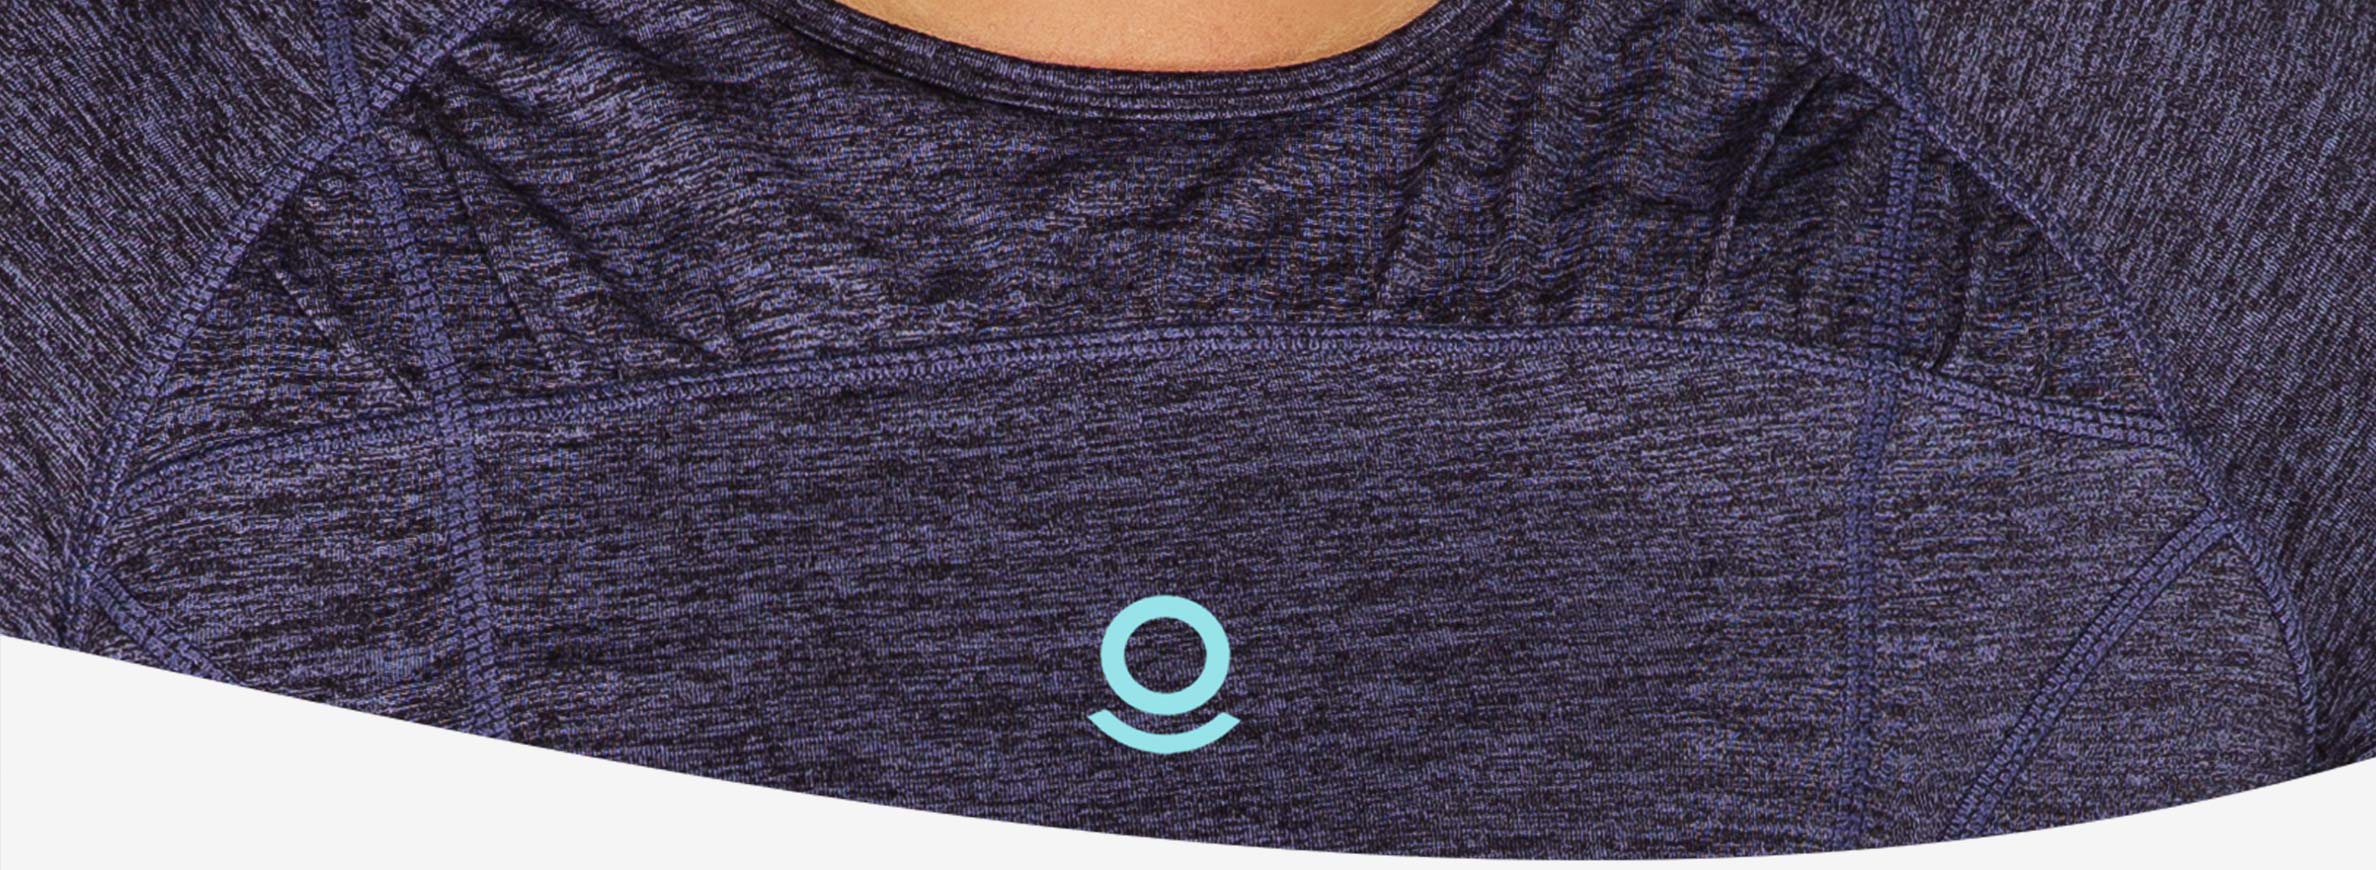 PIVOT Yoga Women's Shirt Detail